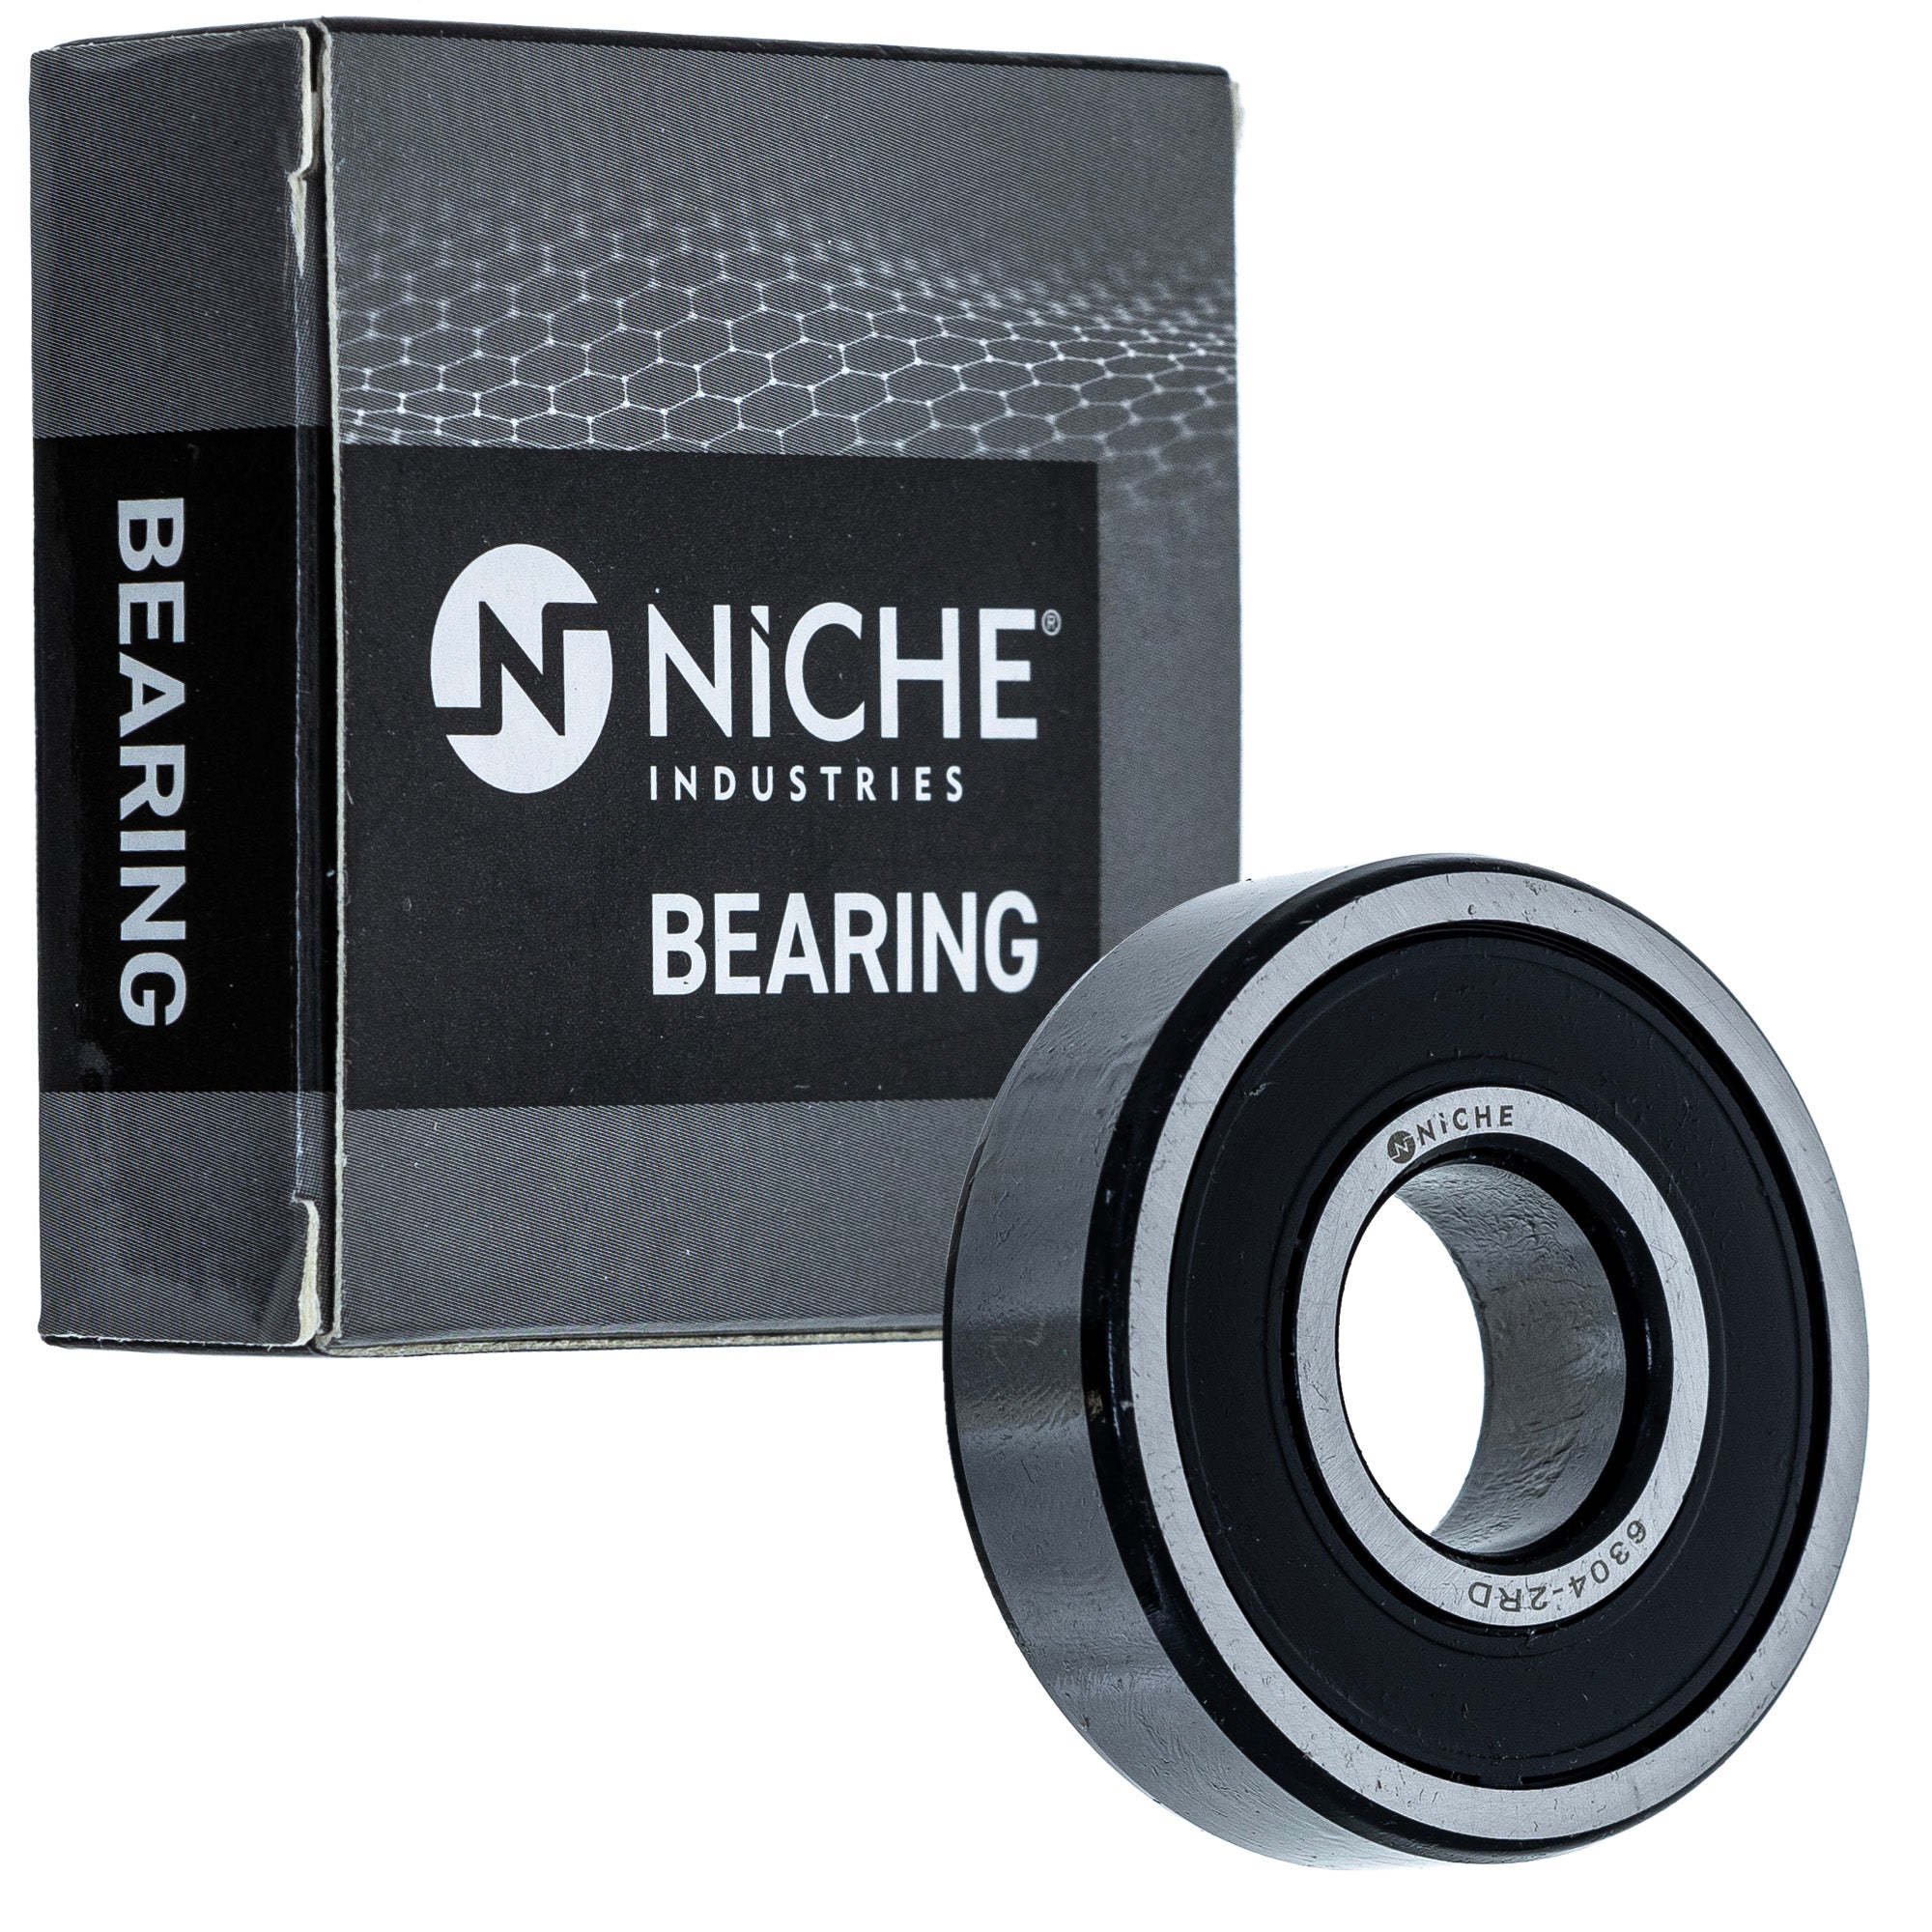 NICHE 519-CBB2207R Bearing 10-Pack for zOTHER VTX1800T3 VTX1800T2